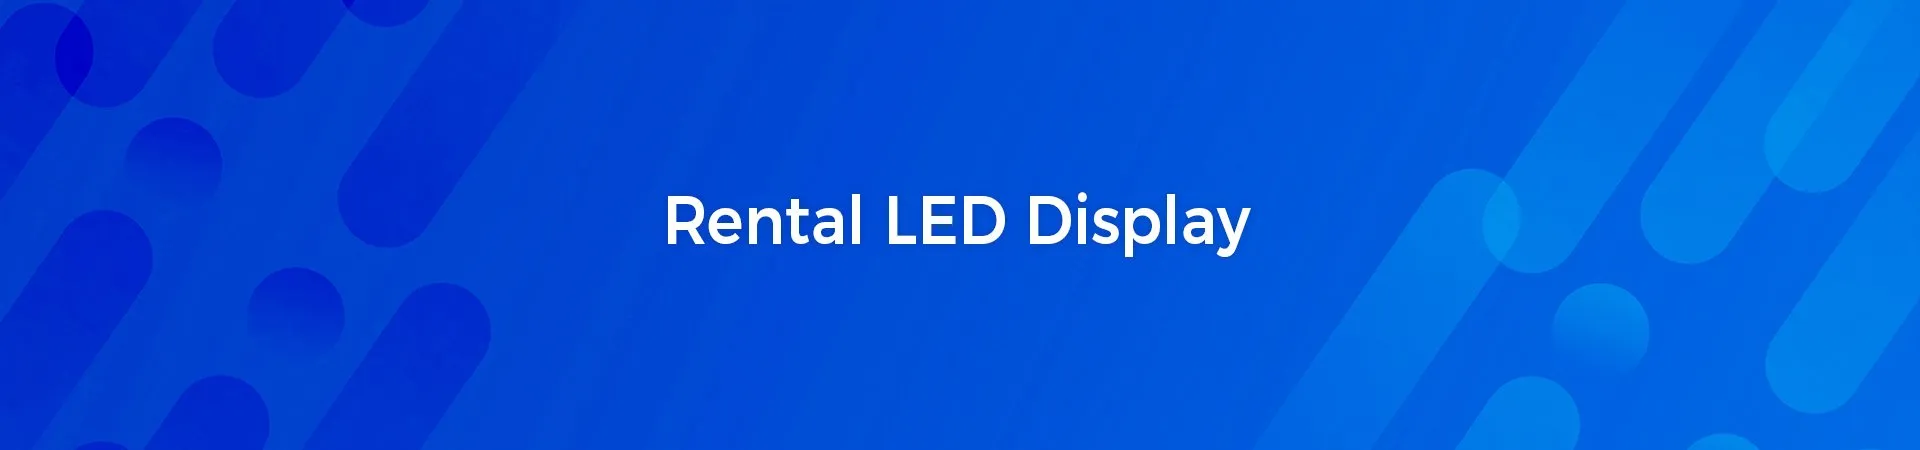 Rental LED Display